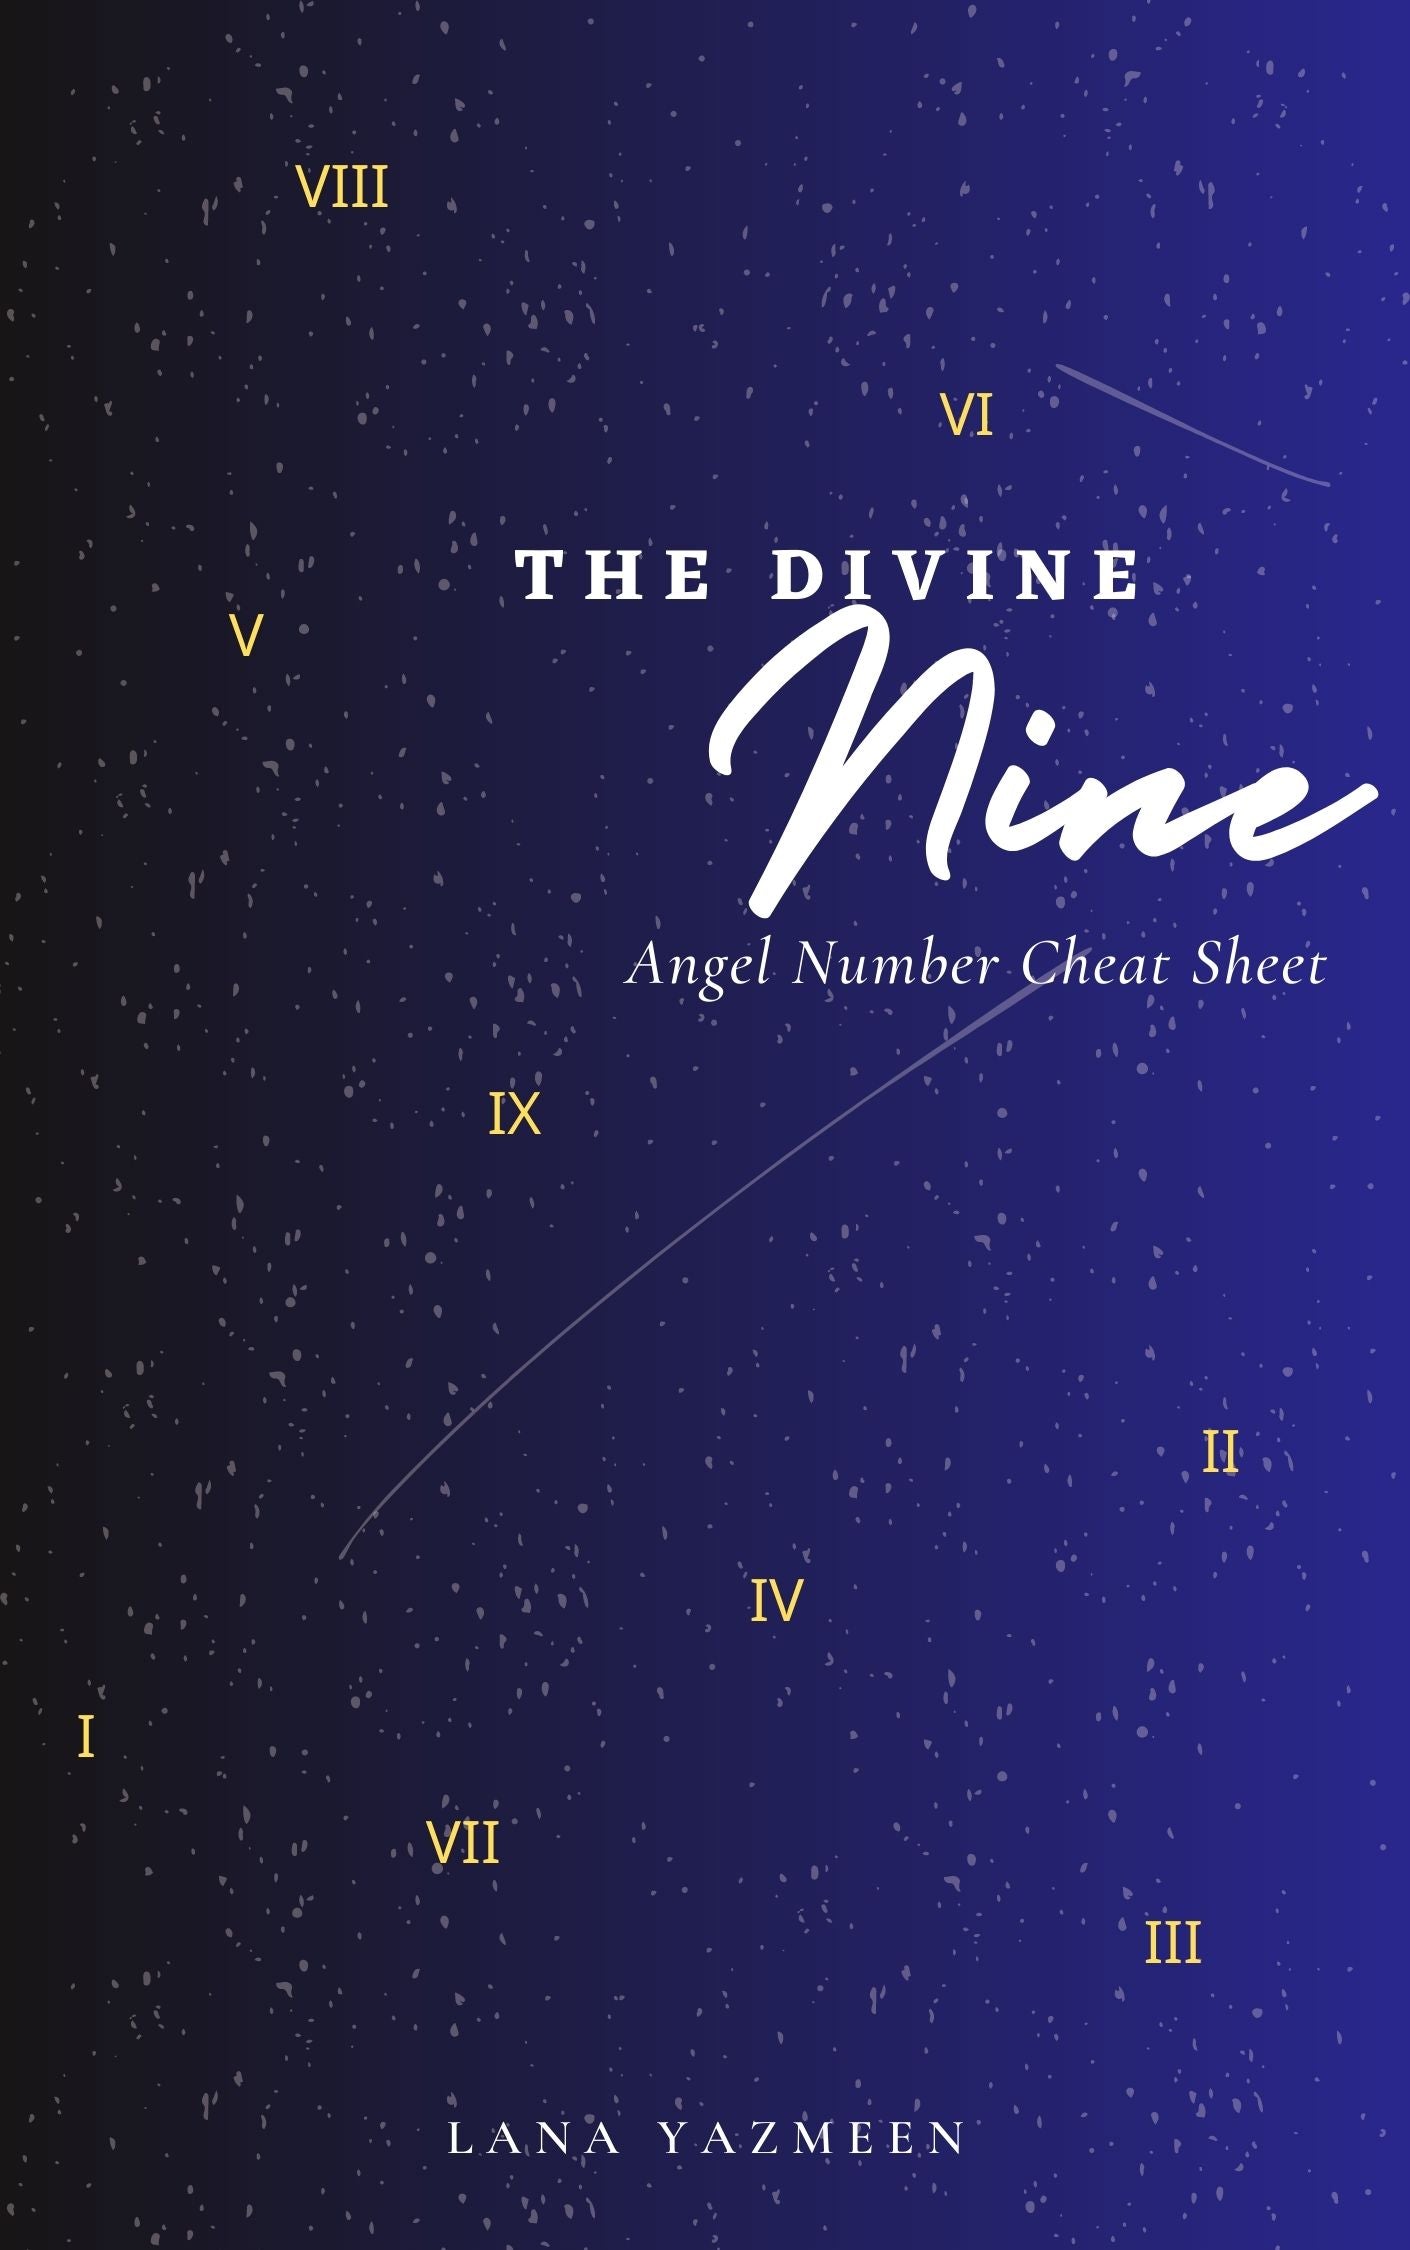 The Divine Nine: Angel Number Cheat Sheet